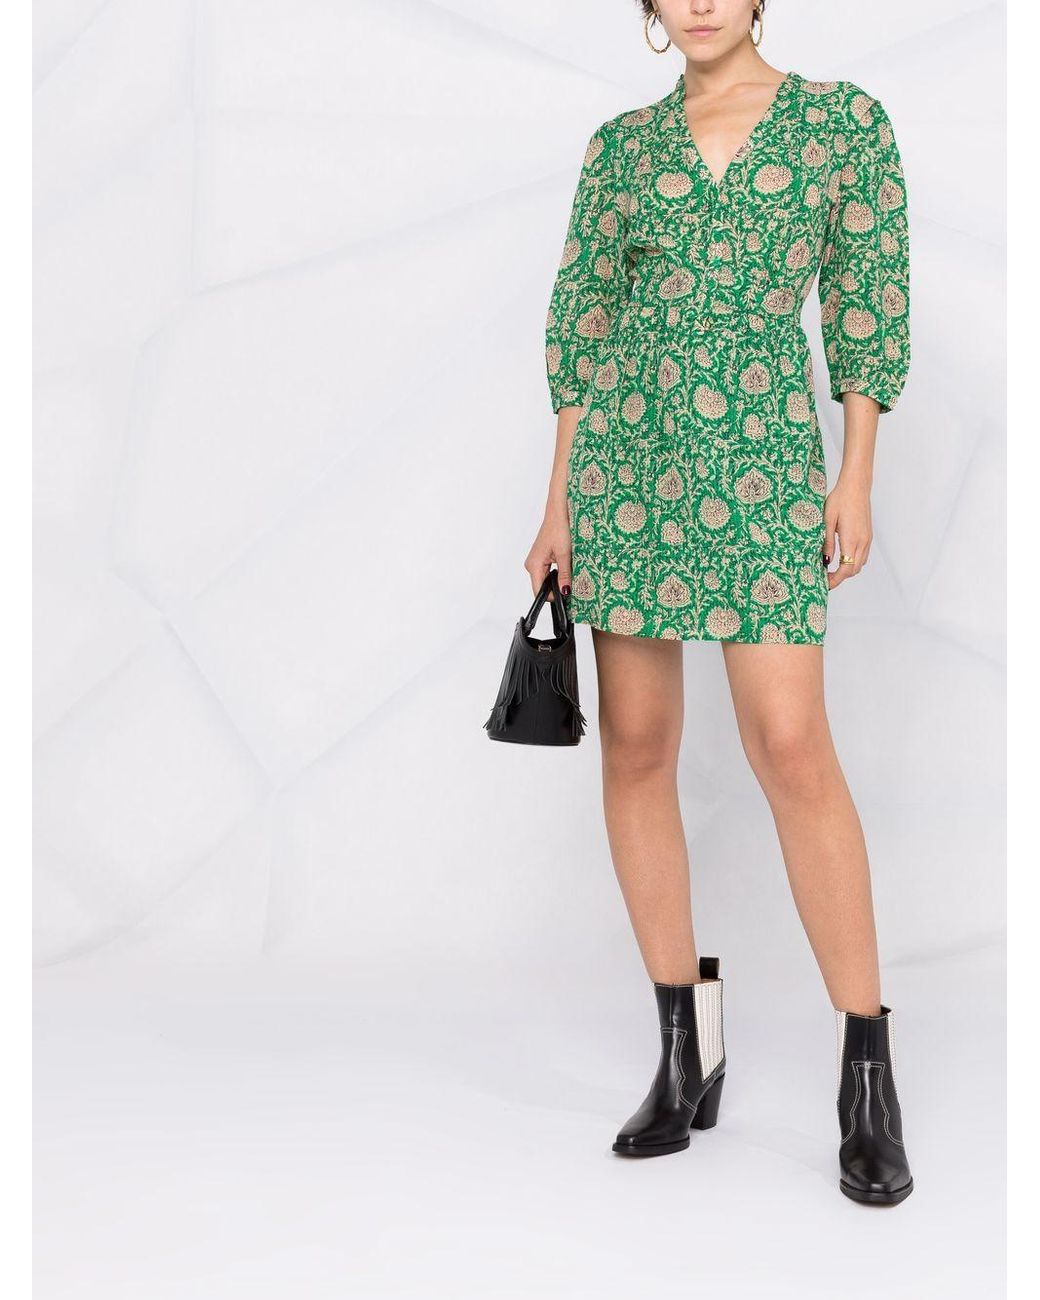 Ba&sh Paz Floral-print Dress in Green | Lyst Canada